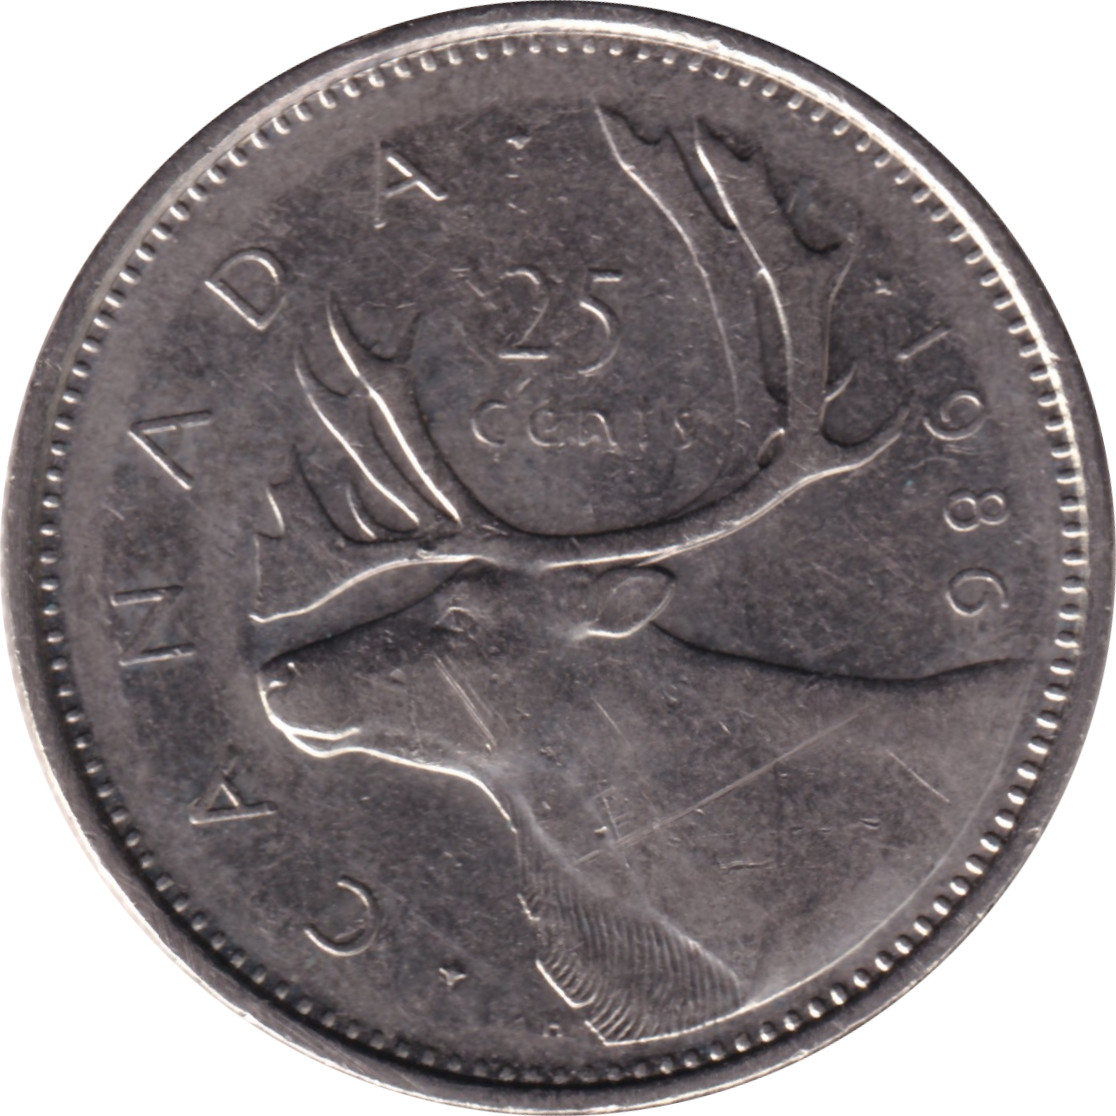 25 cents - Elizabeth II - Mature bust